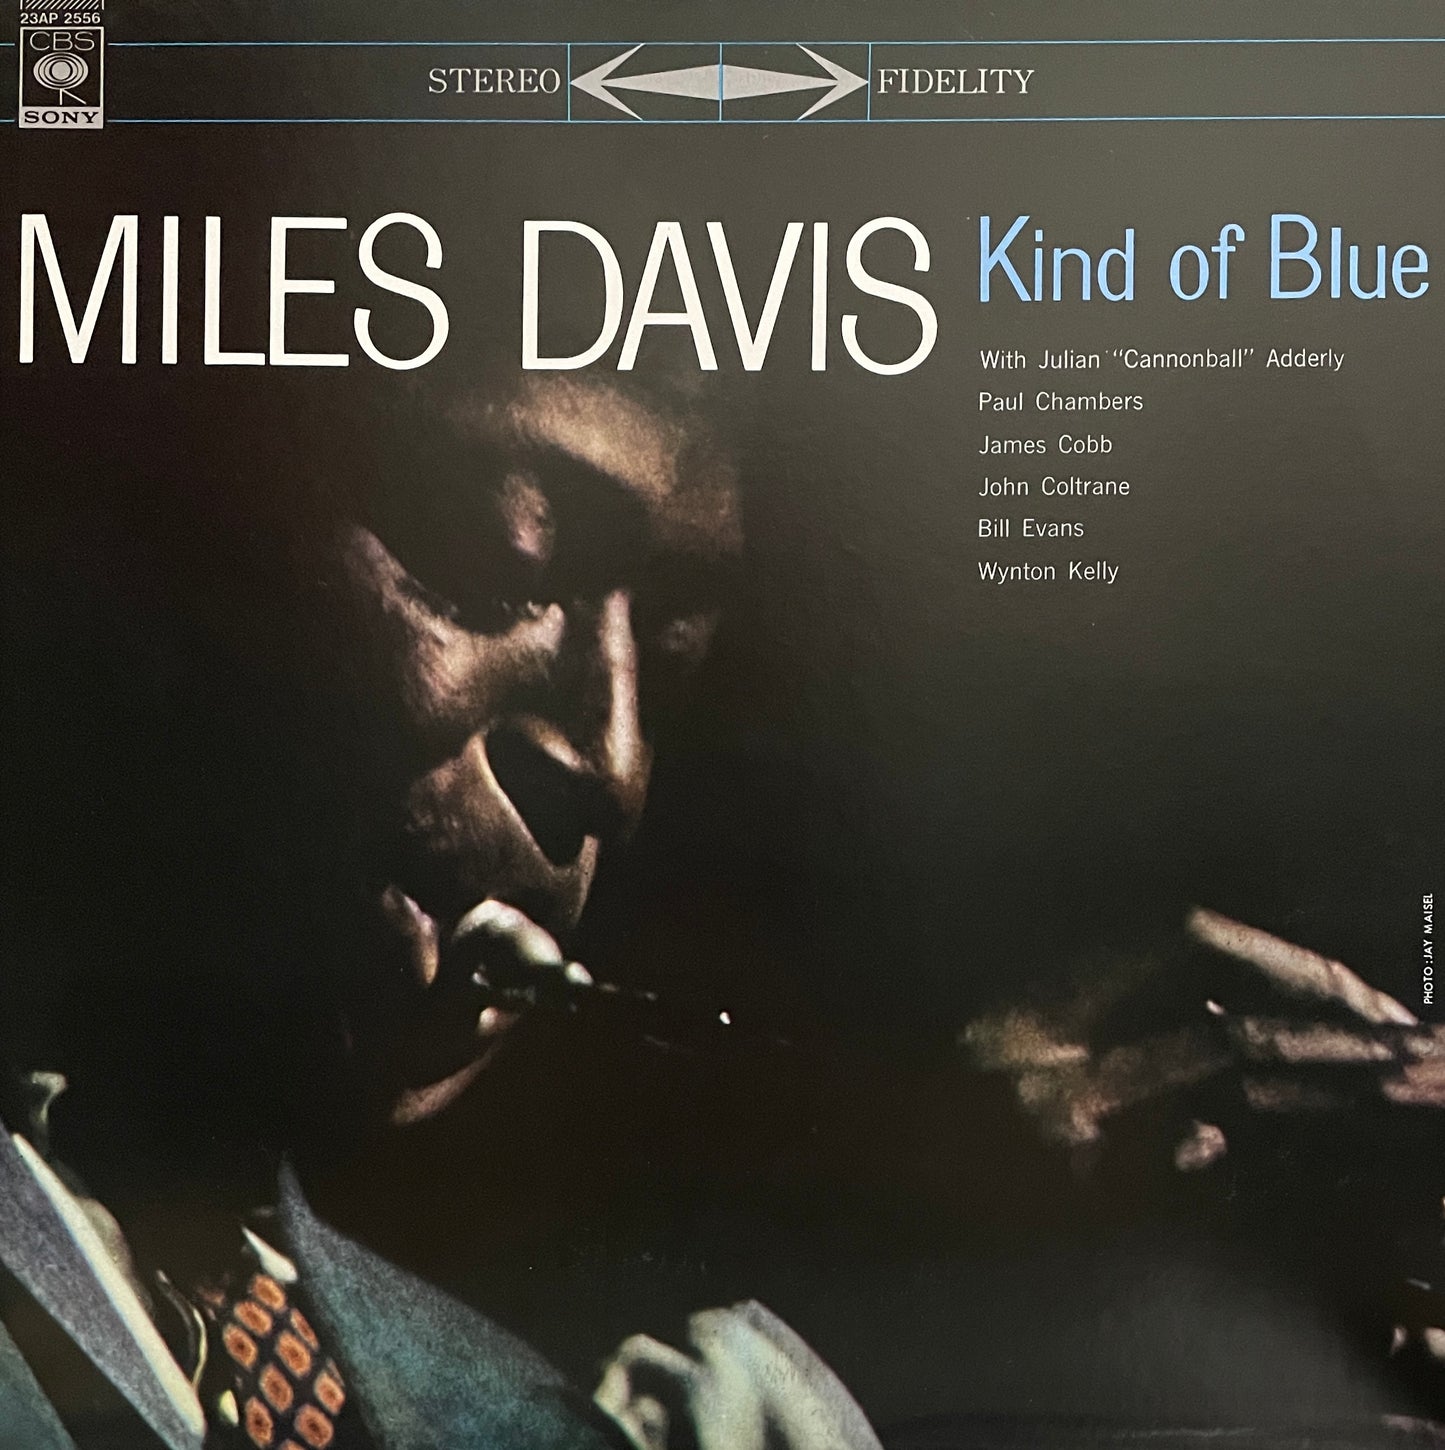 Miles Davis "Kind Of Blue" (1983)